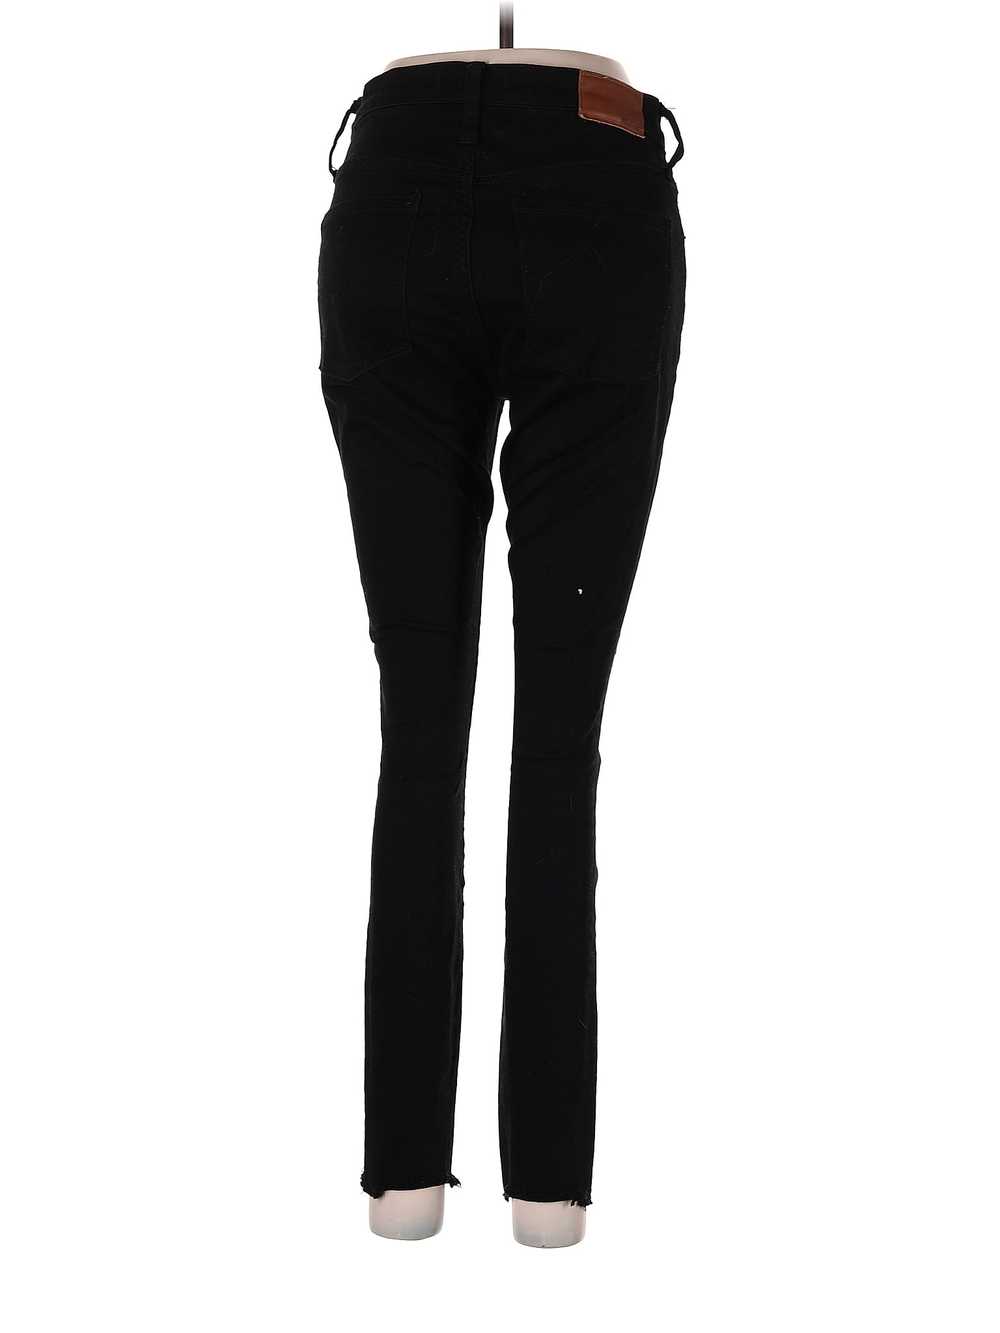 Madewell Women Black Jeans 28W - image 2